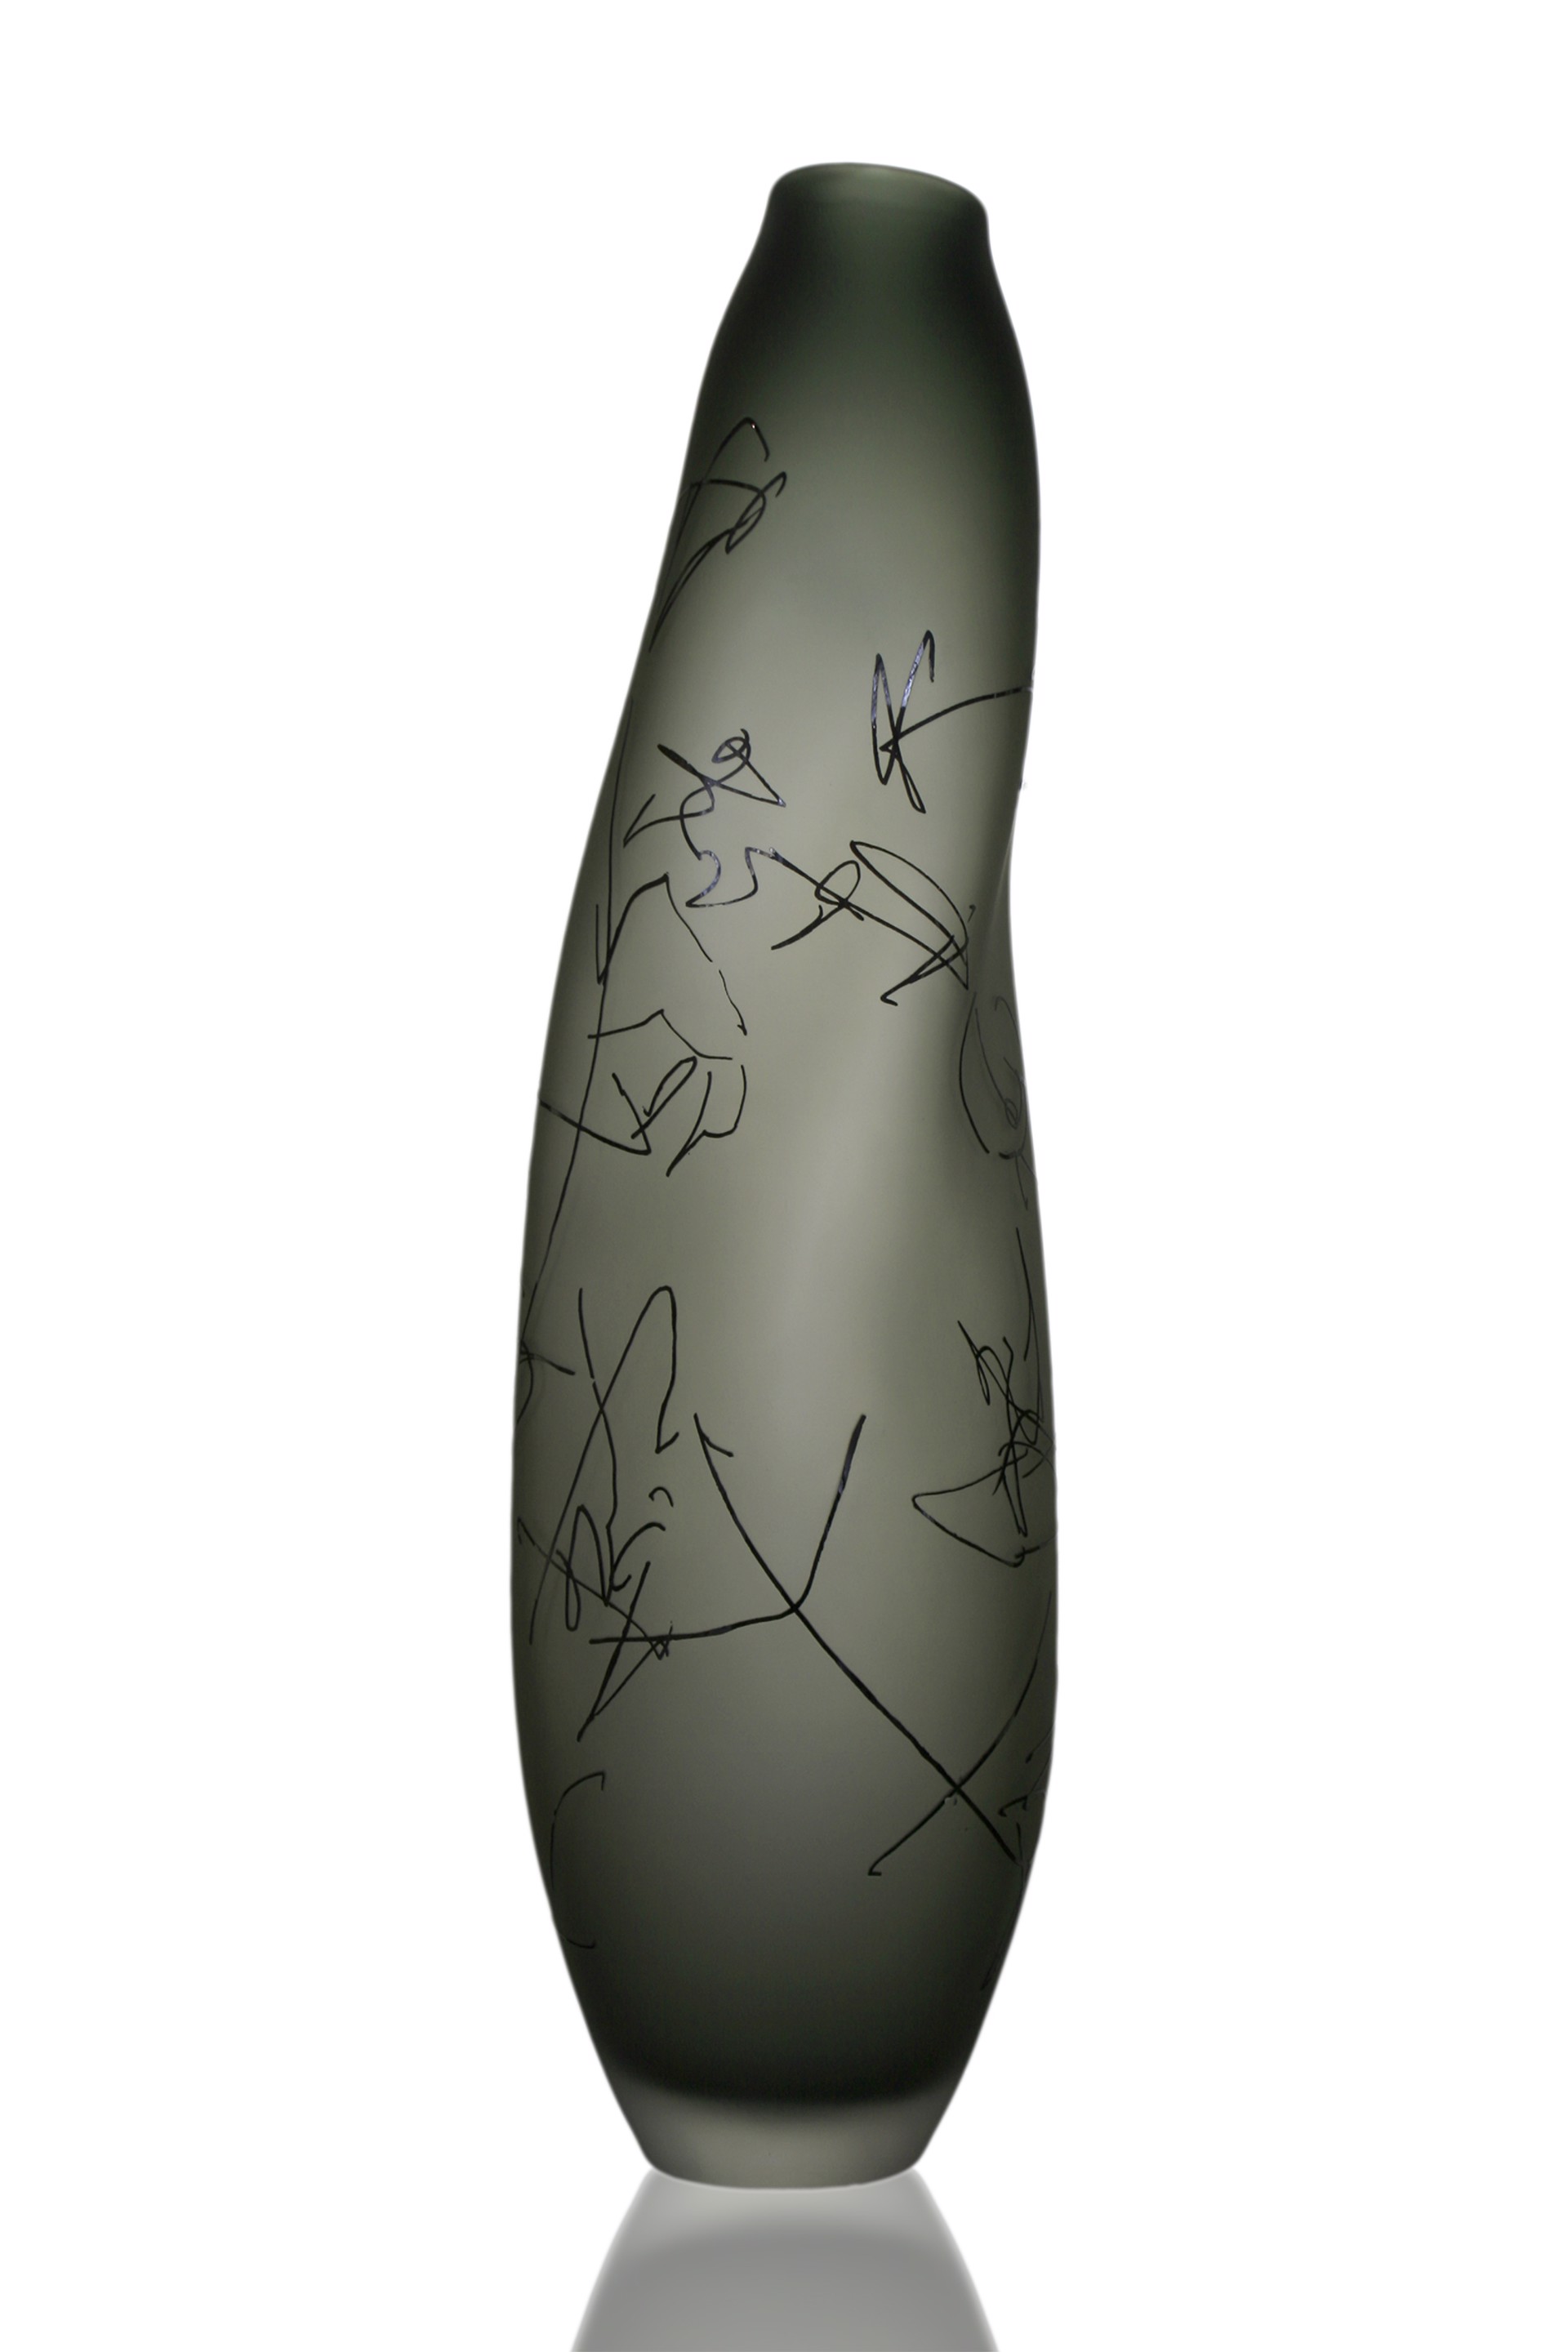 Neutral Grey Scribe Vase by The Goodman Studio